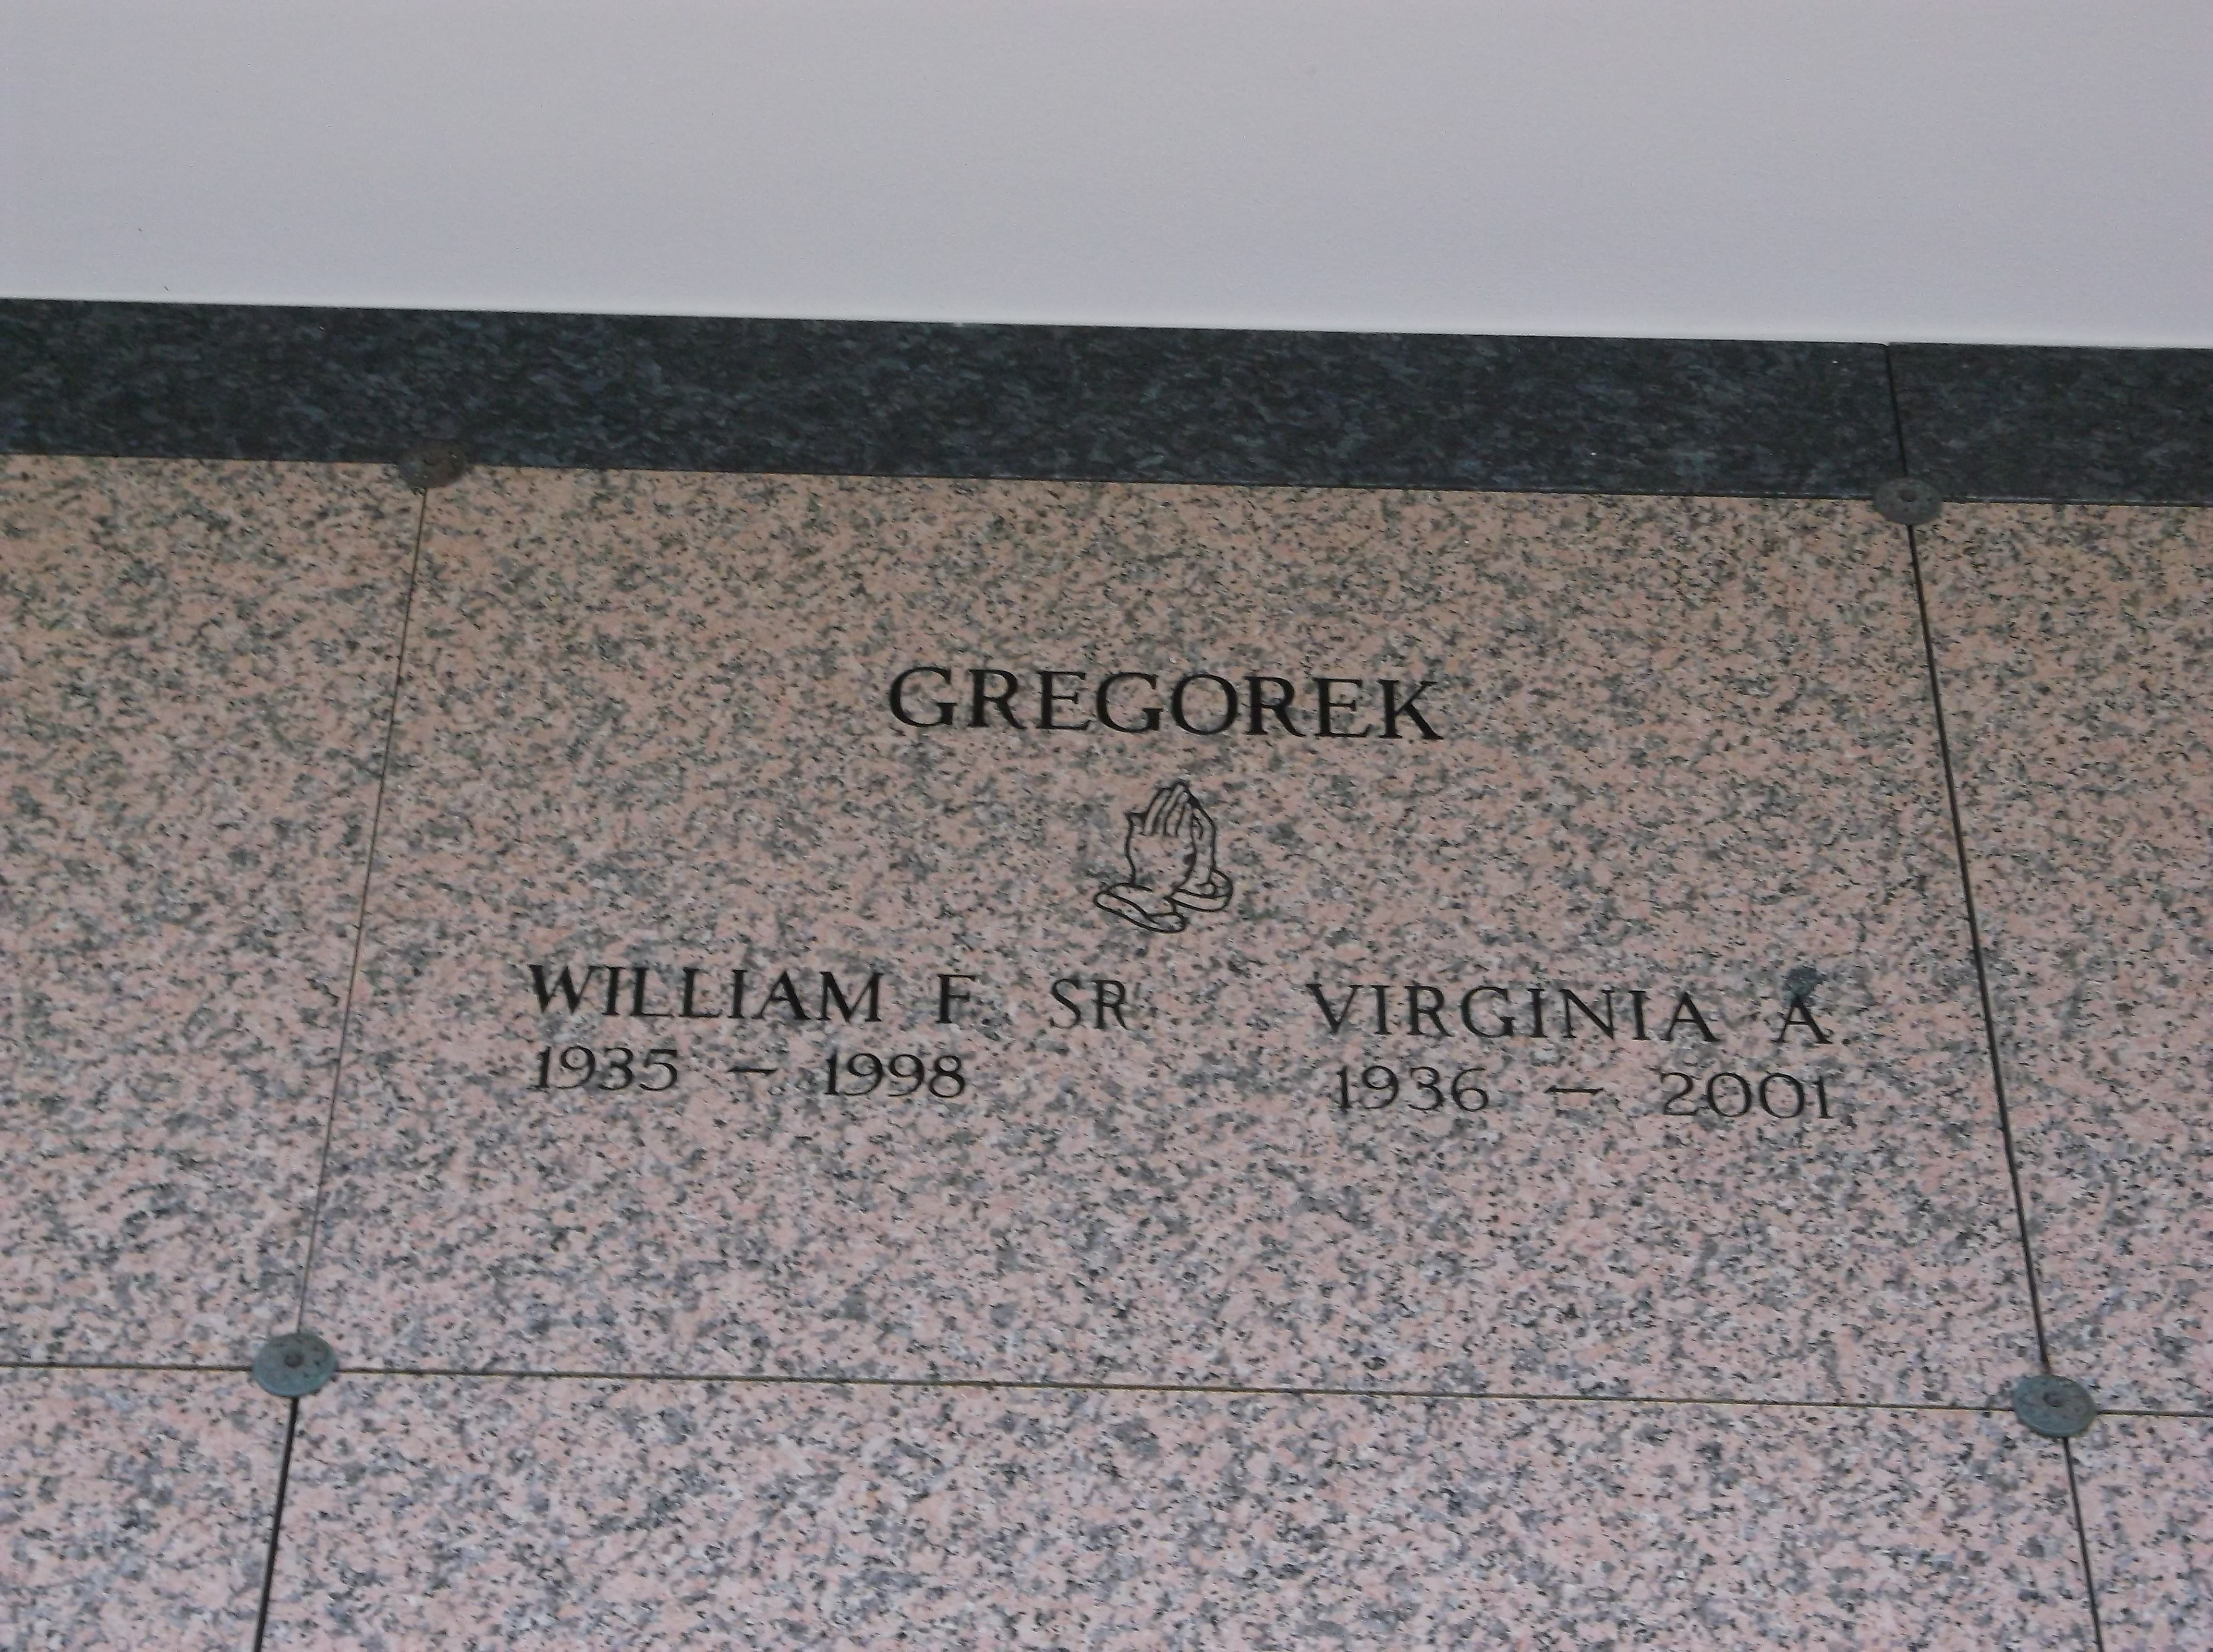 Virginia A Gregorek